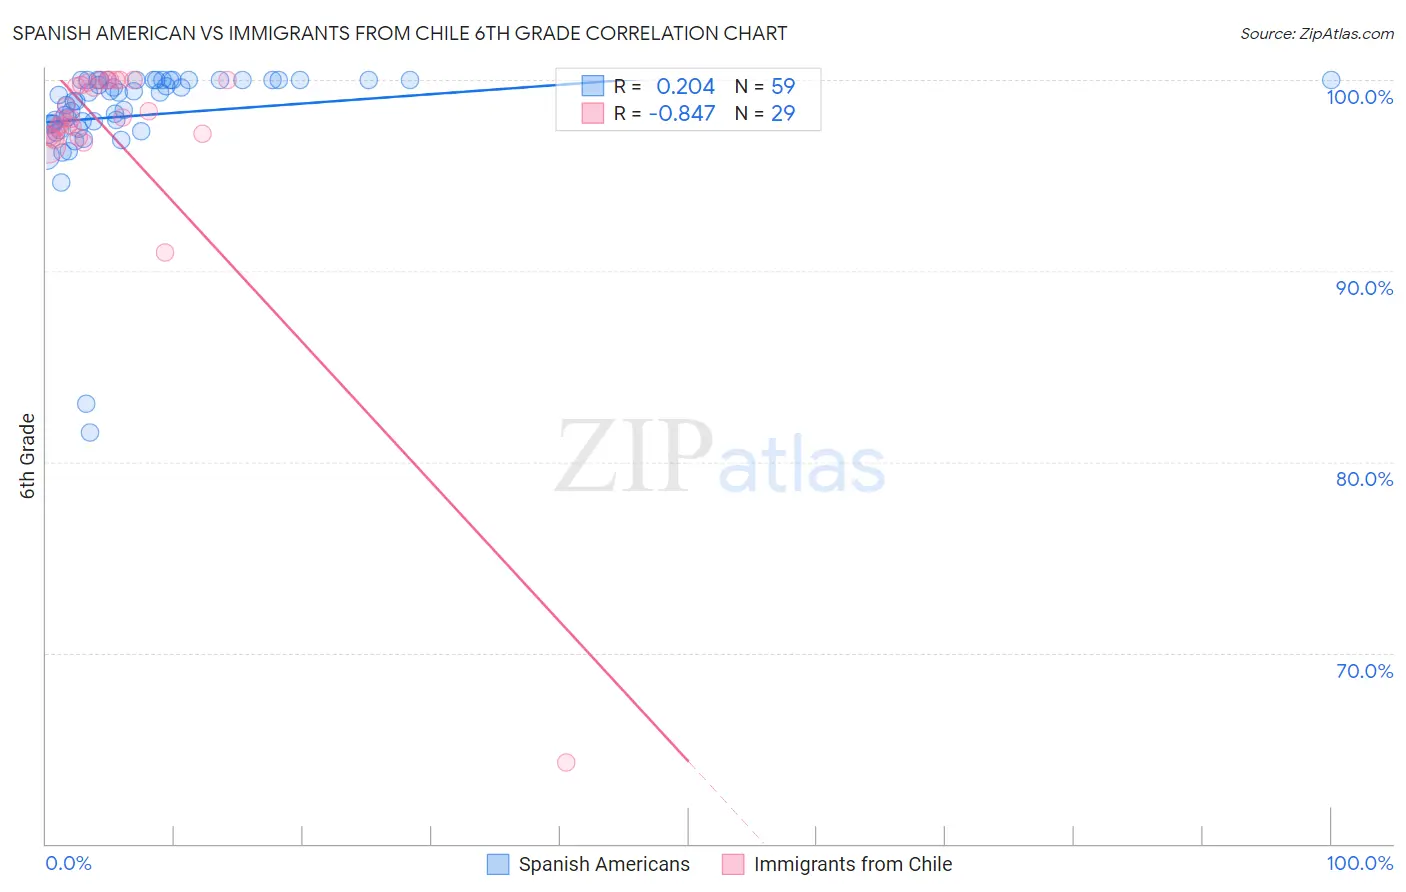 Spanish American vs Immigrants from Chile 6th Grade